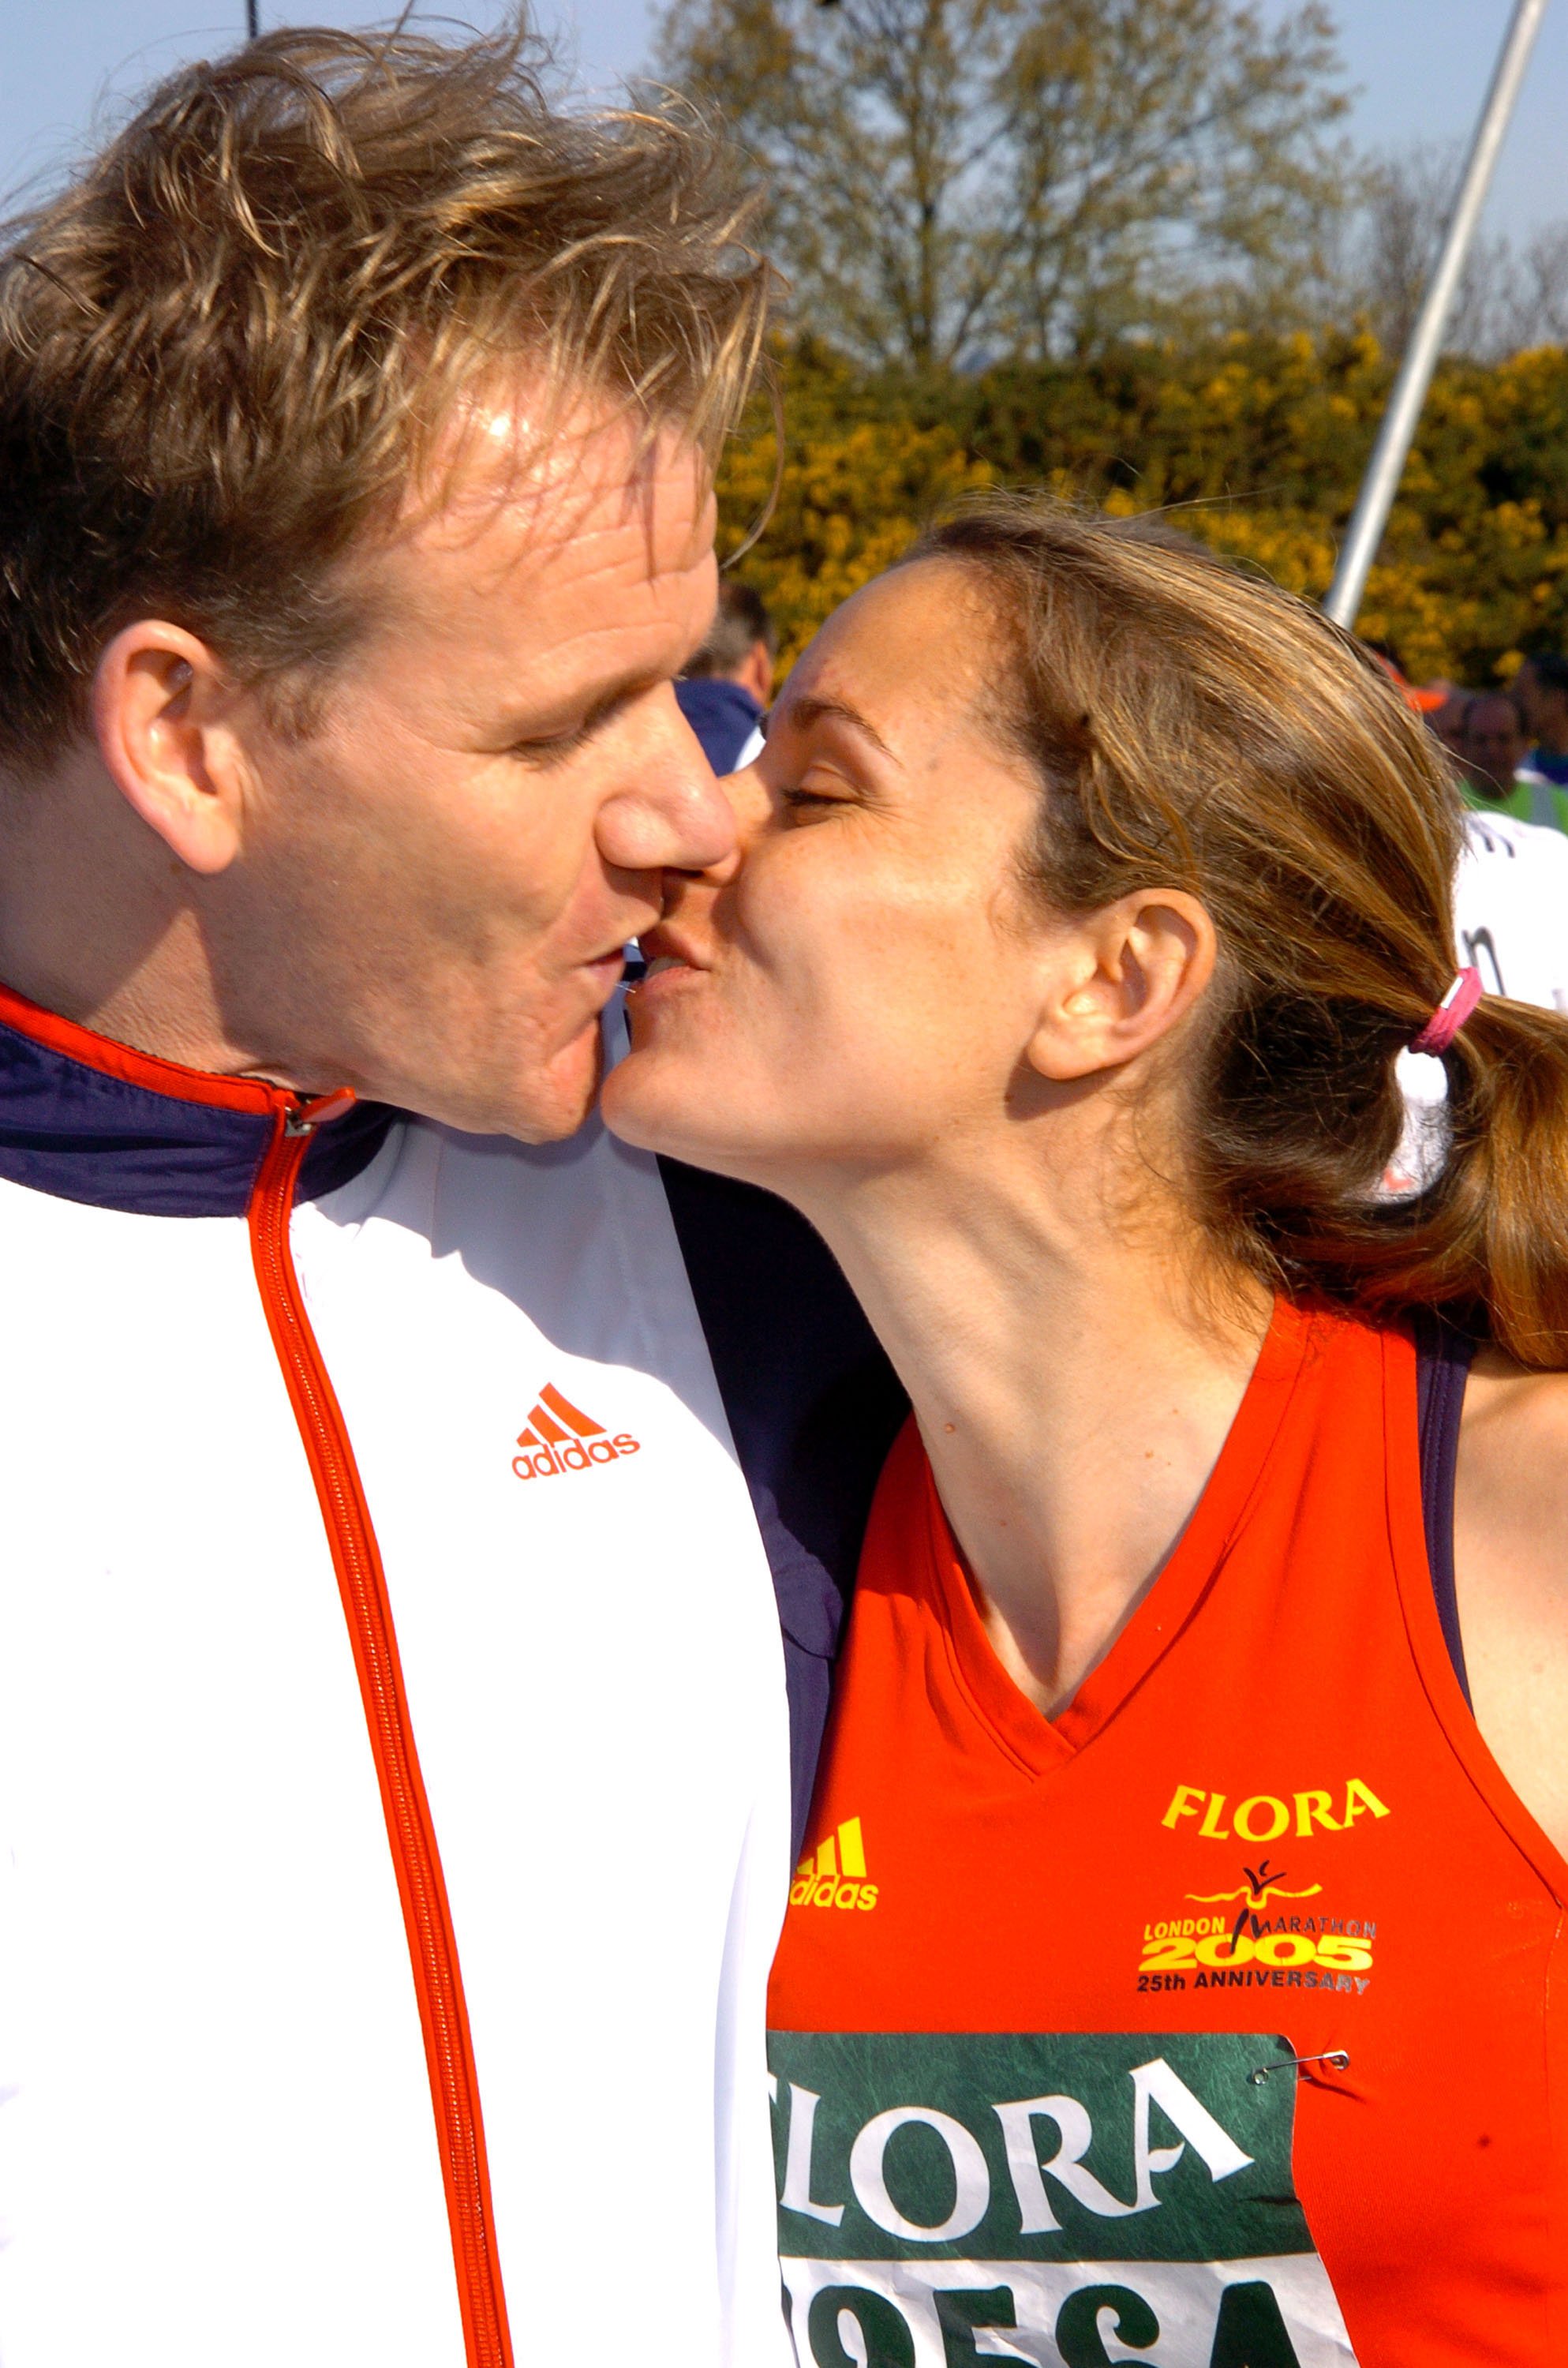 Gordon Ramsay et sa femme Tana Ramsay lors du marathon Flora London 2005 au Mall à Londres, Grande-Bretagne. | Source : Getty Images